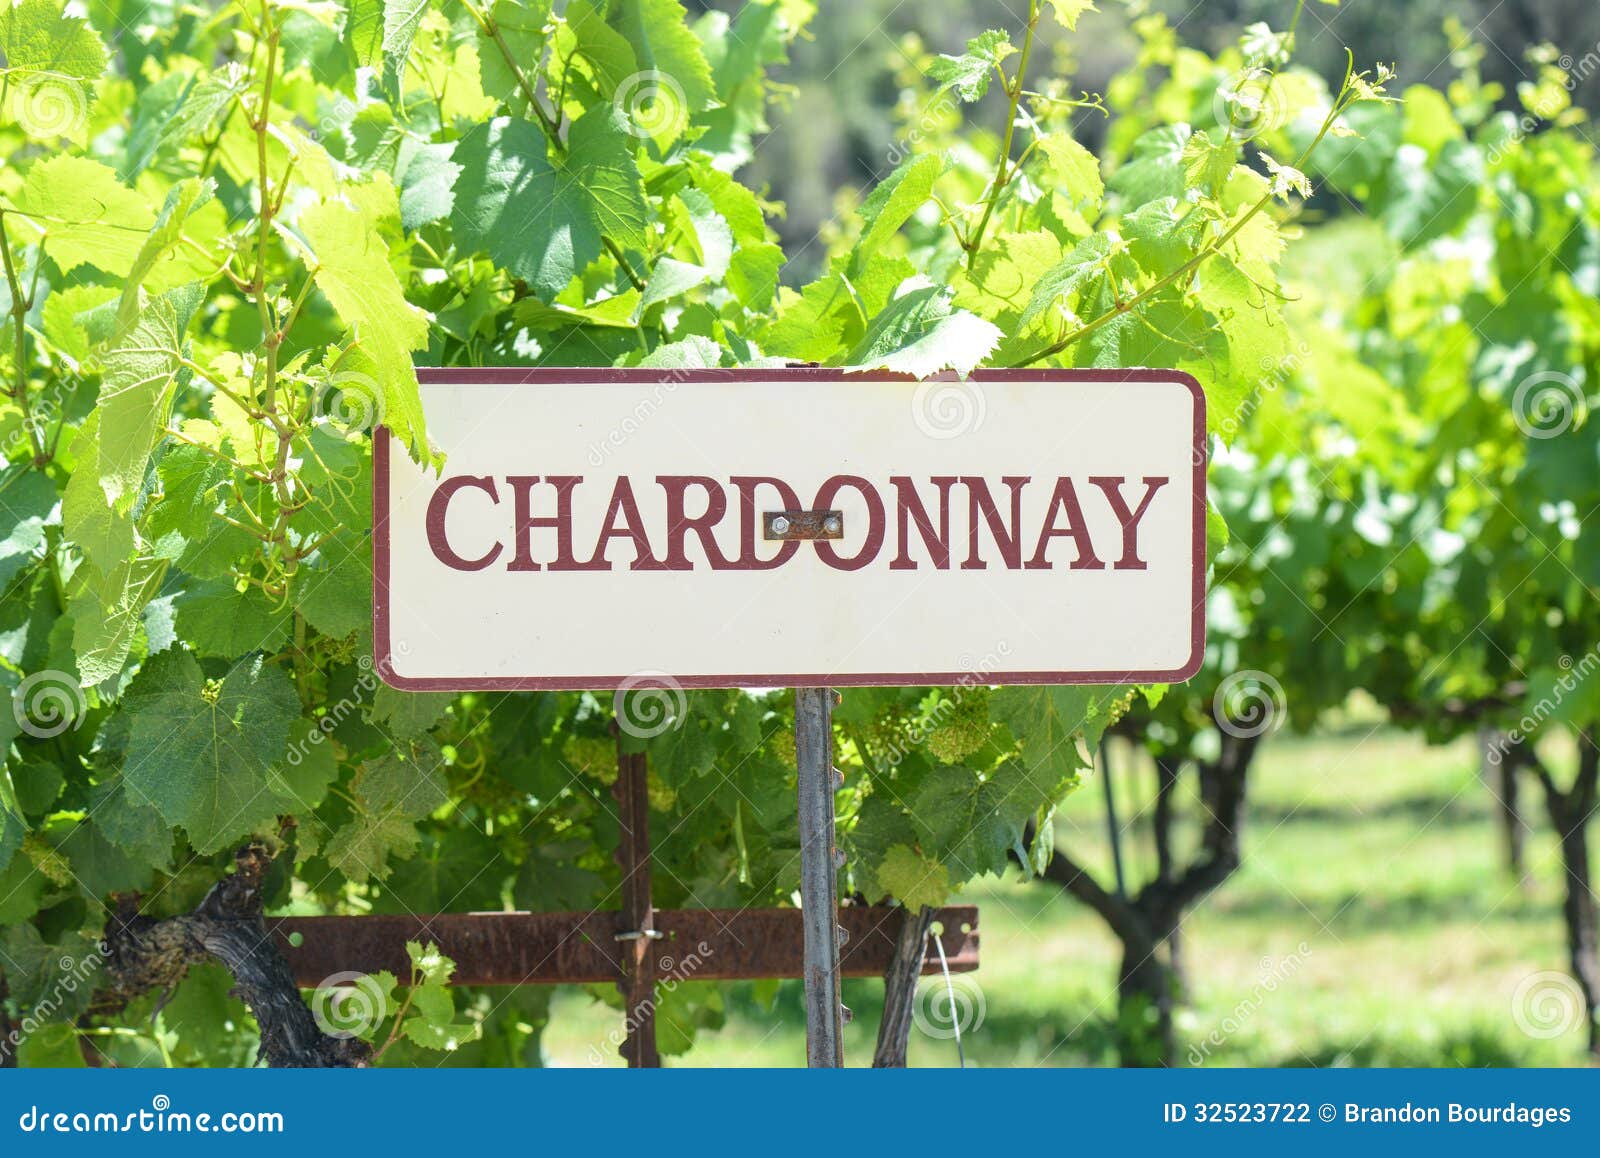 chardonnay grapes sign